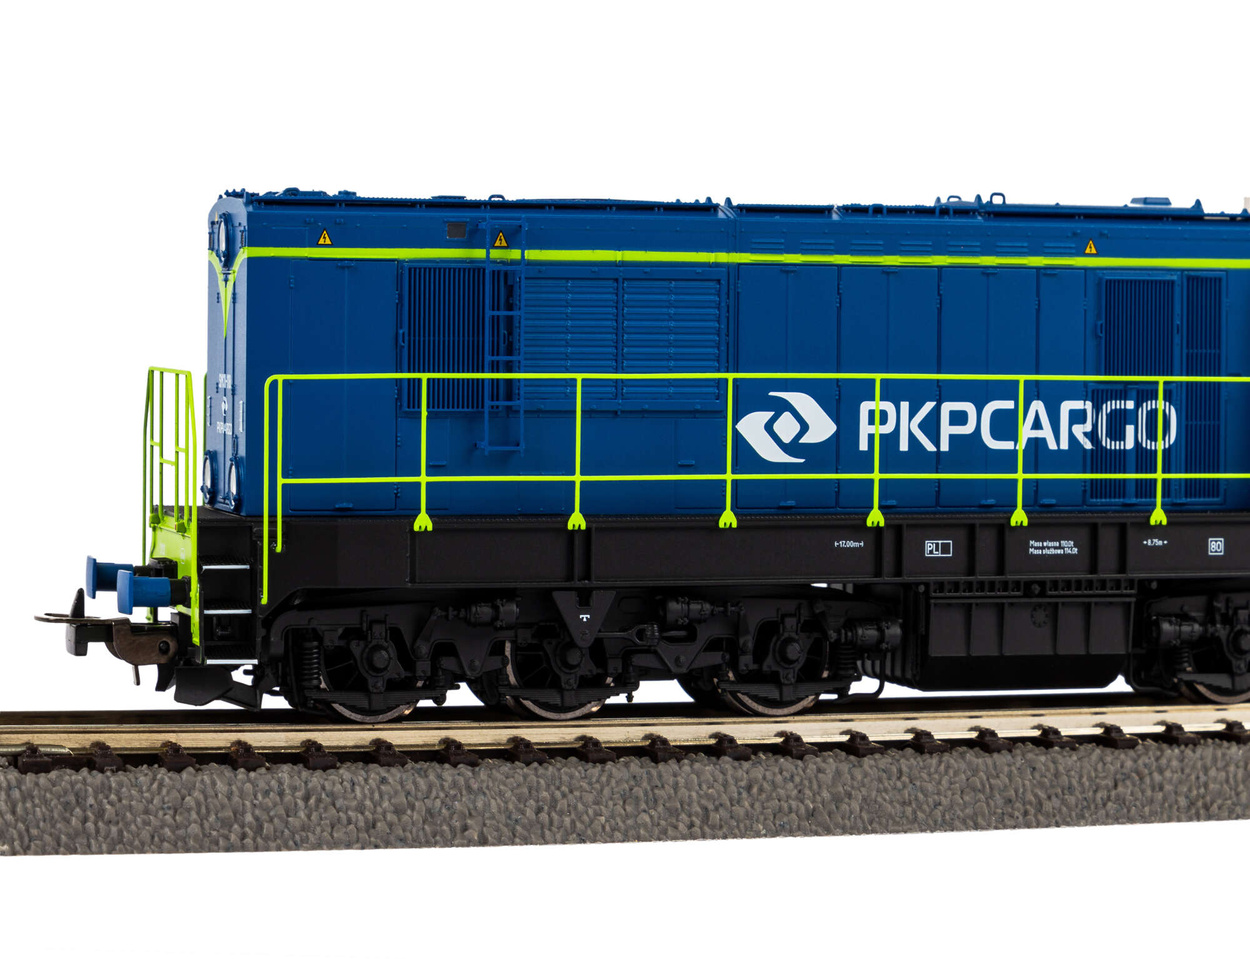 Spalinowóz SM31 PKP Cargo - Piko 52300